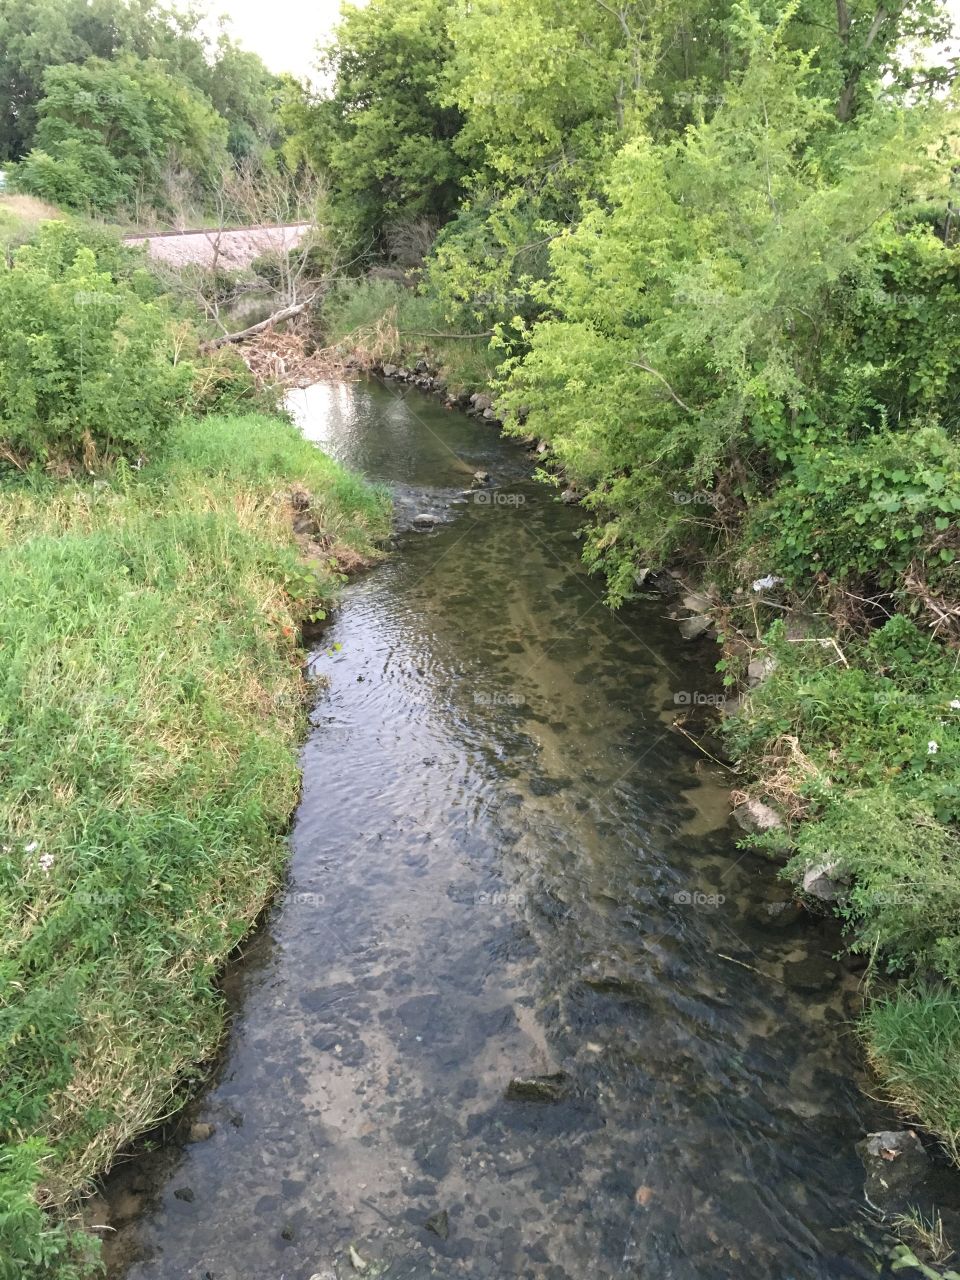 McCloud Run - Iowas only urban trout stream. 